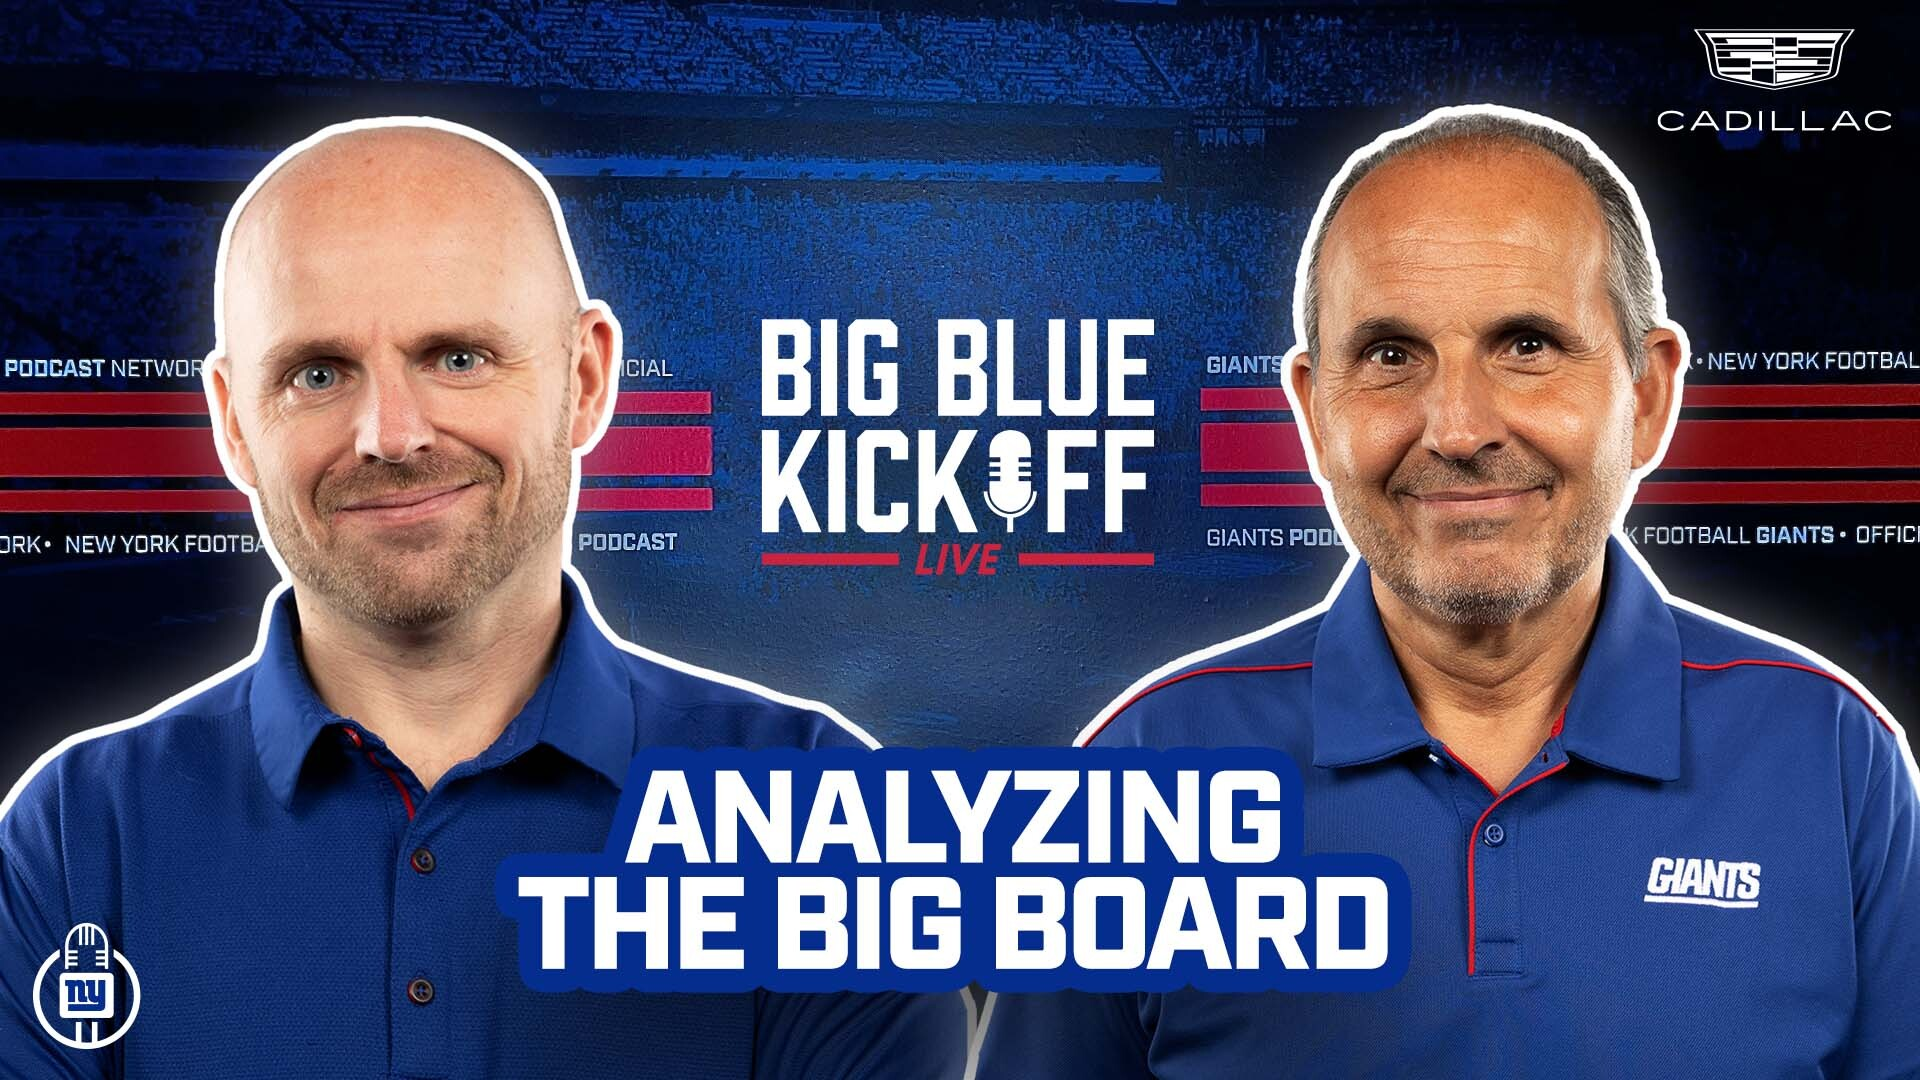 Big Blue Kickoff Live 4/19 | Analyzing the Big Board